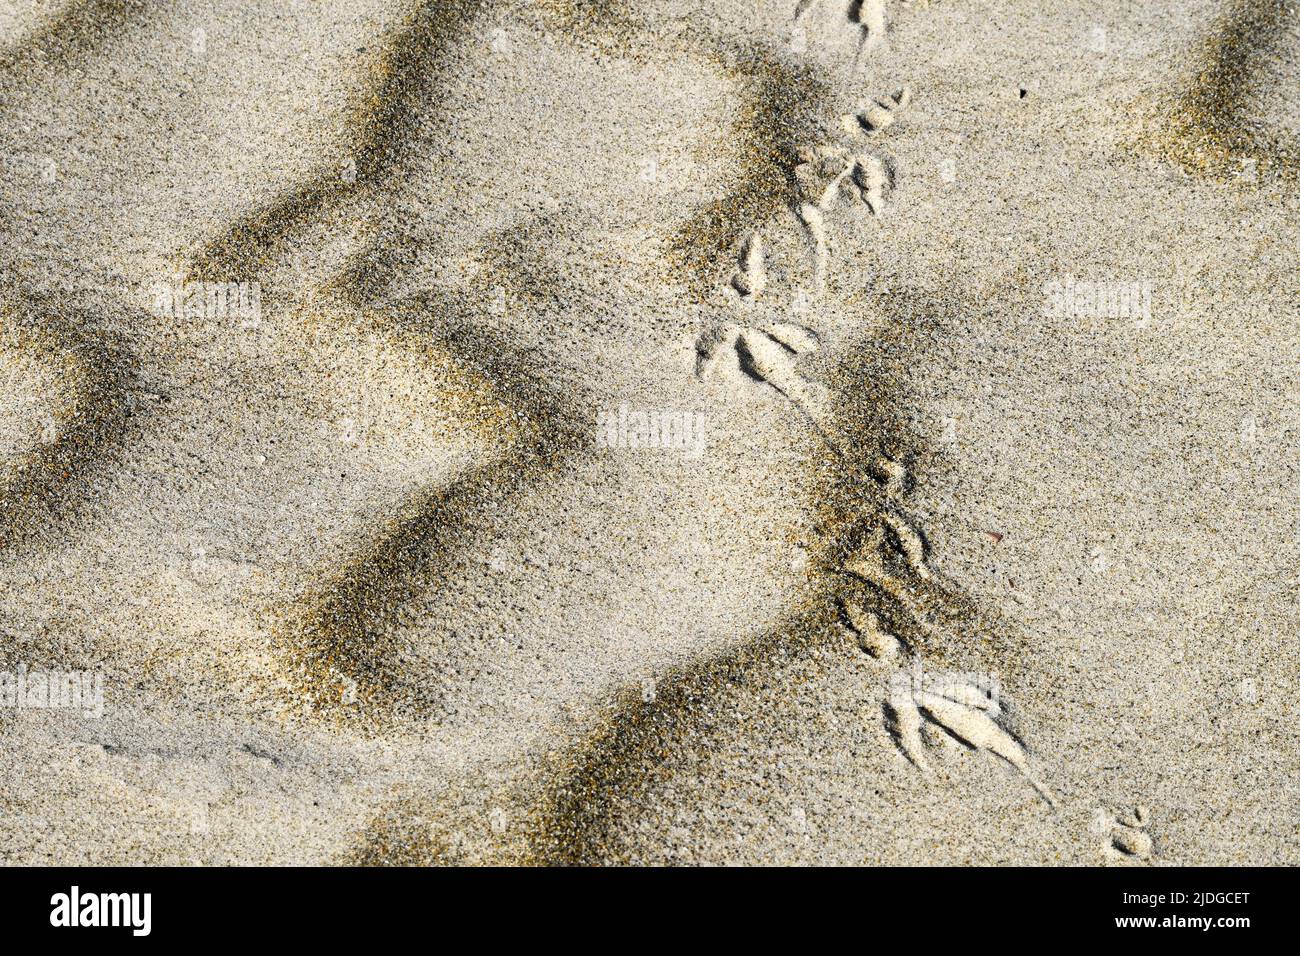 Pie de aves imprimir sobre arena. Foto de stock